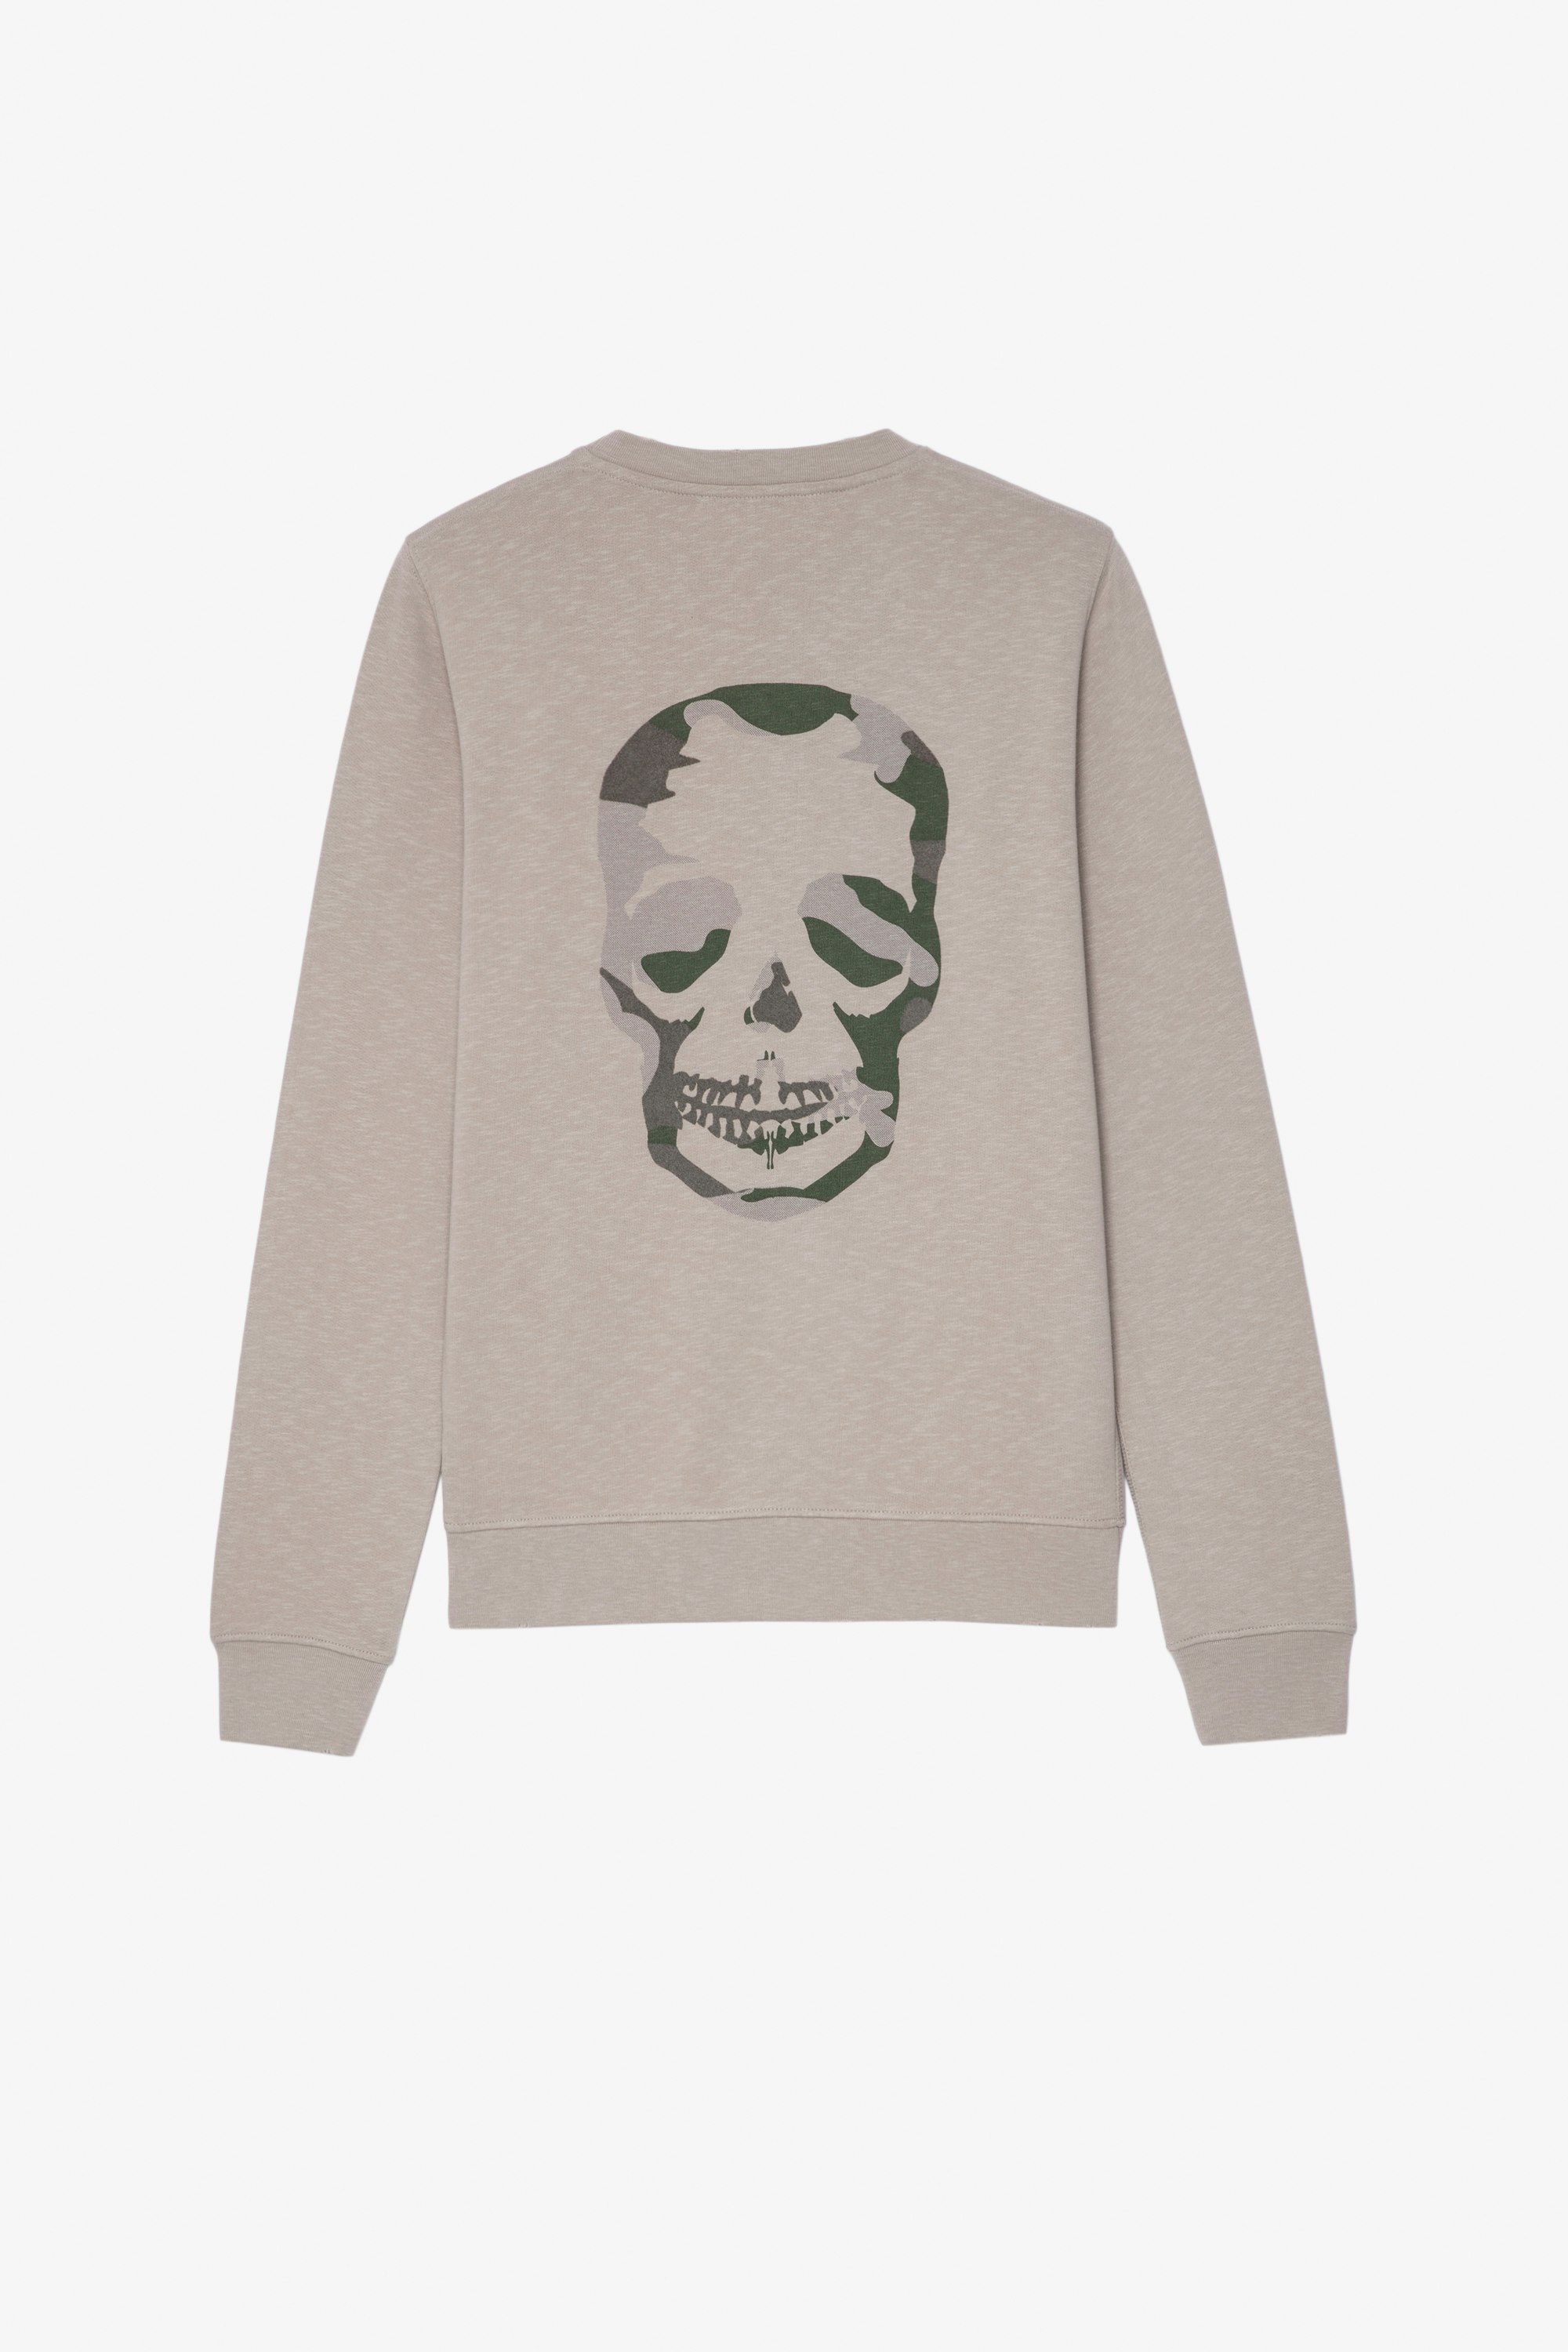 Soft Sweatshirt Men's beige cotton sweatshirt with camouflage skull print on back